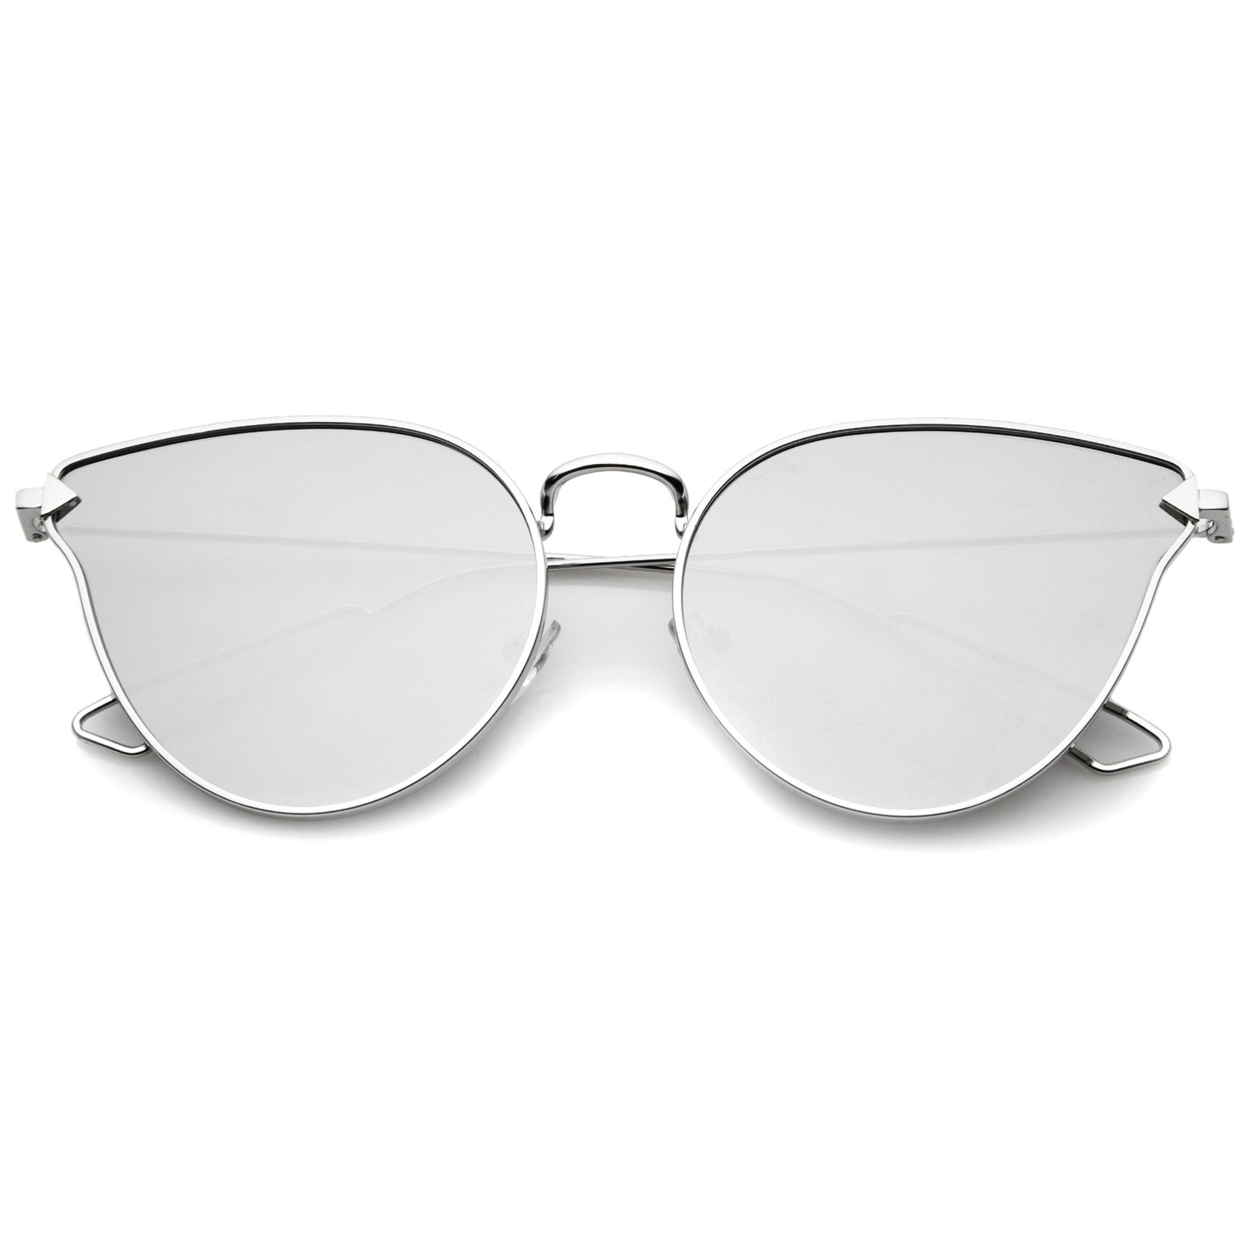 Women's Metal Frame Arrow Temples Color Mirror Flat Lens Cat Eye Sunglasses 58mm - Gold / Smoke Mirror